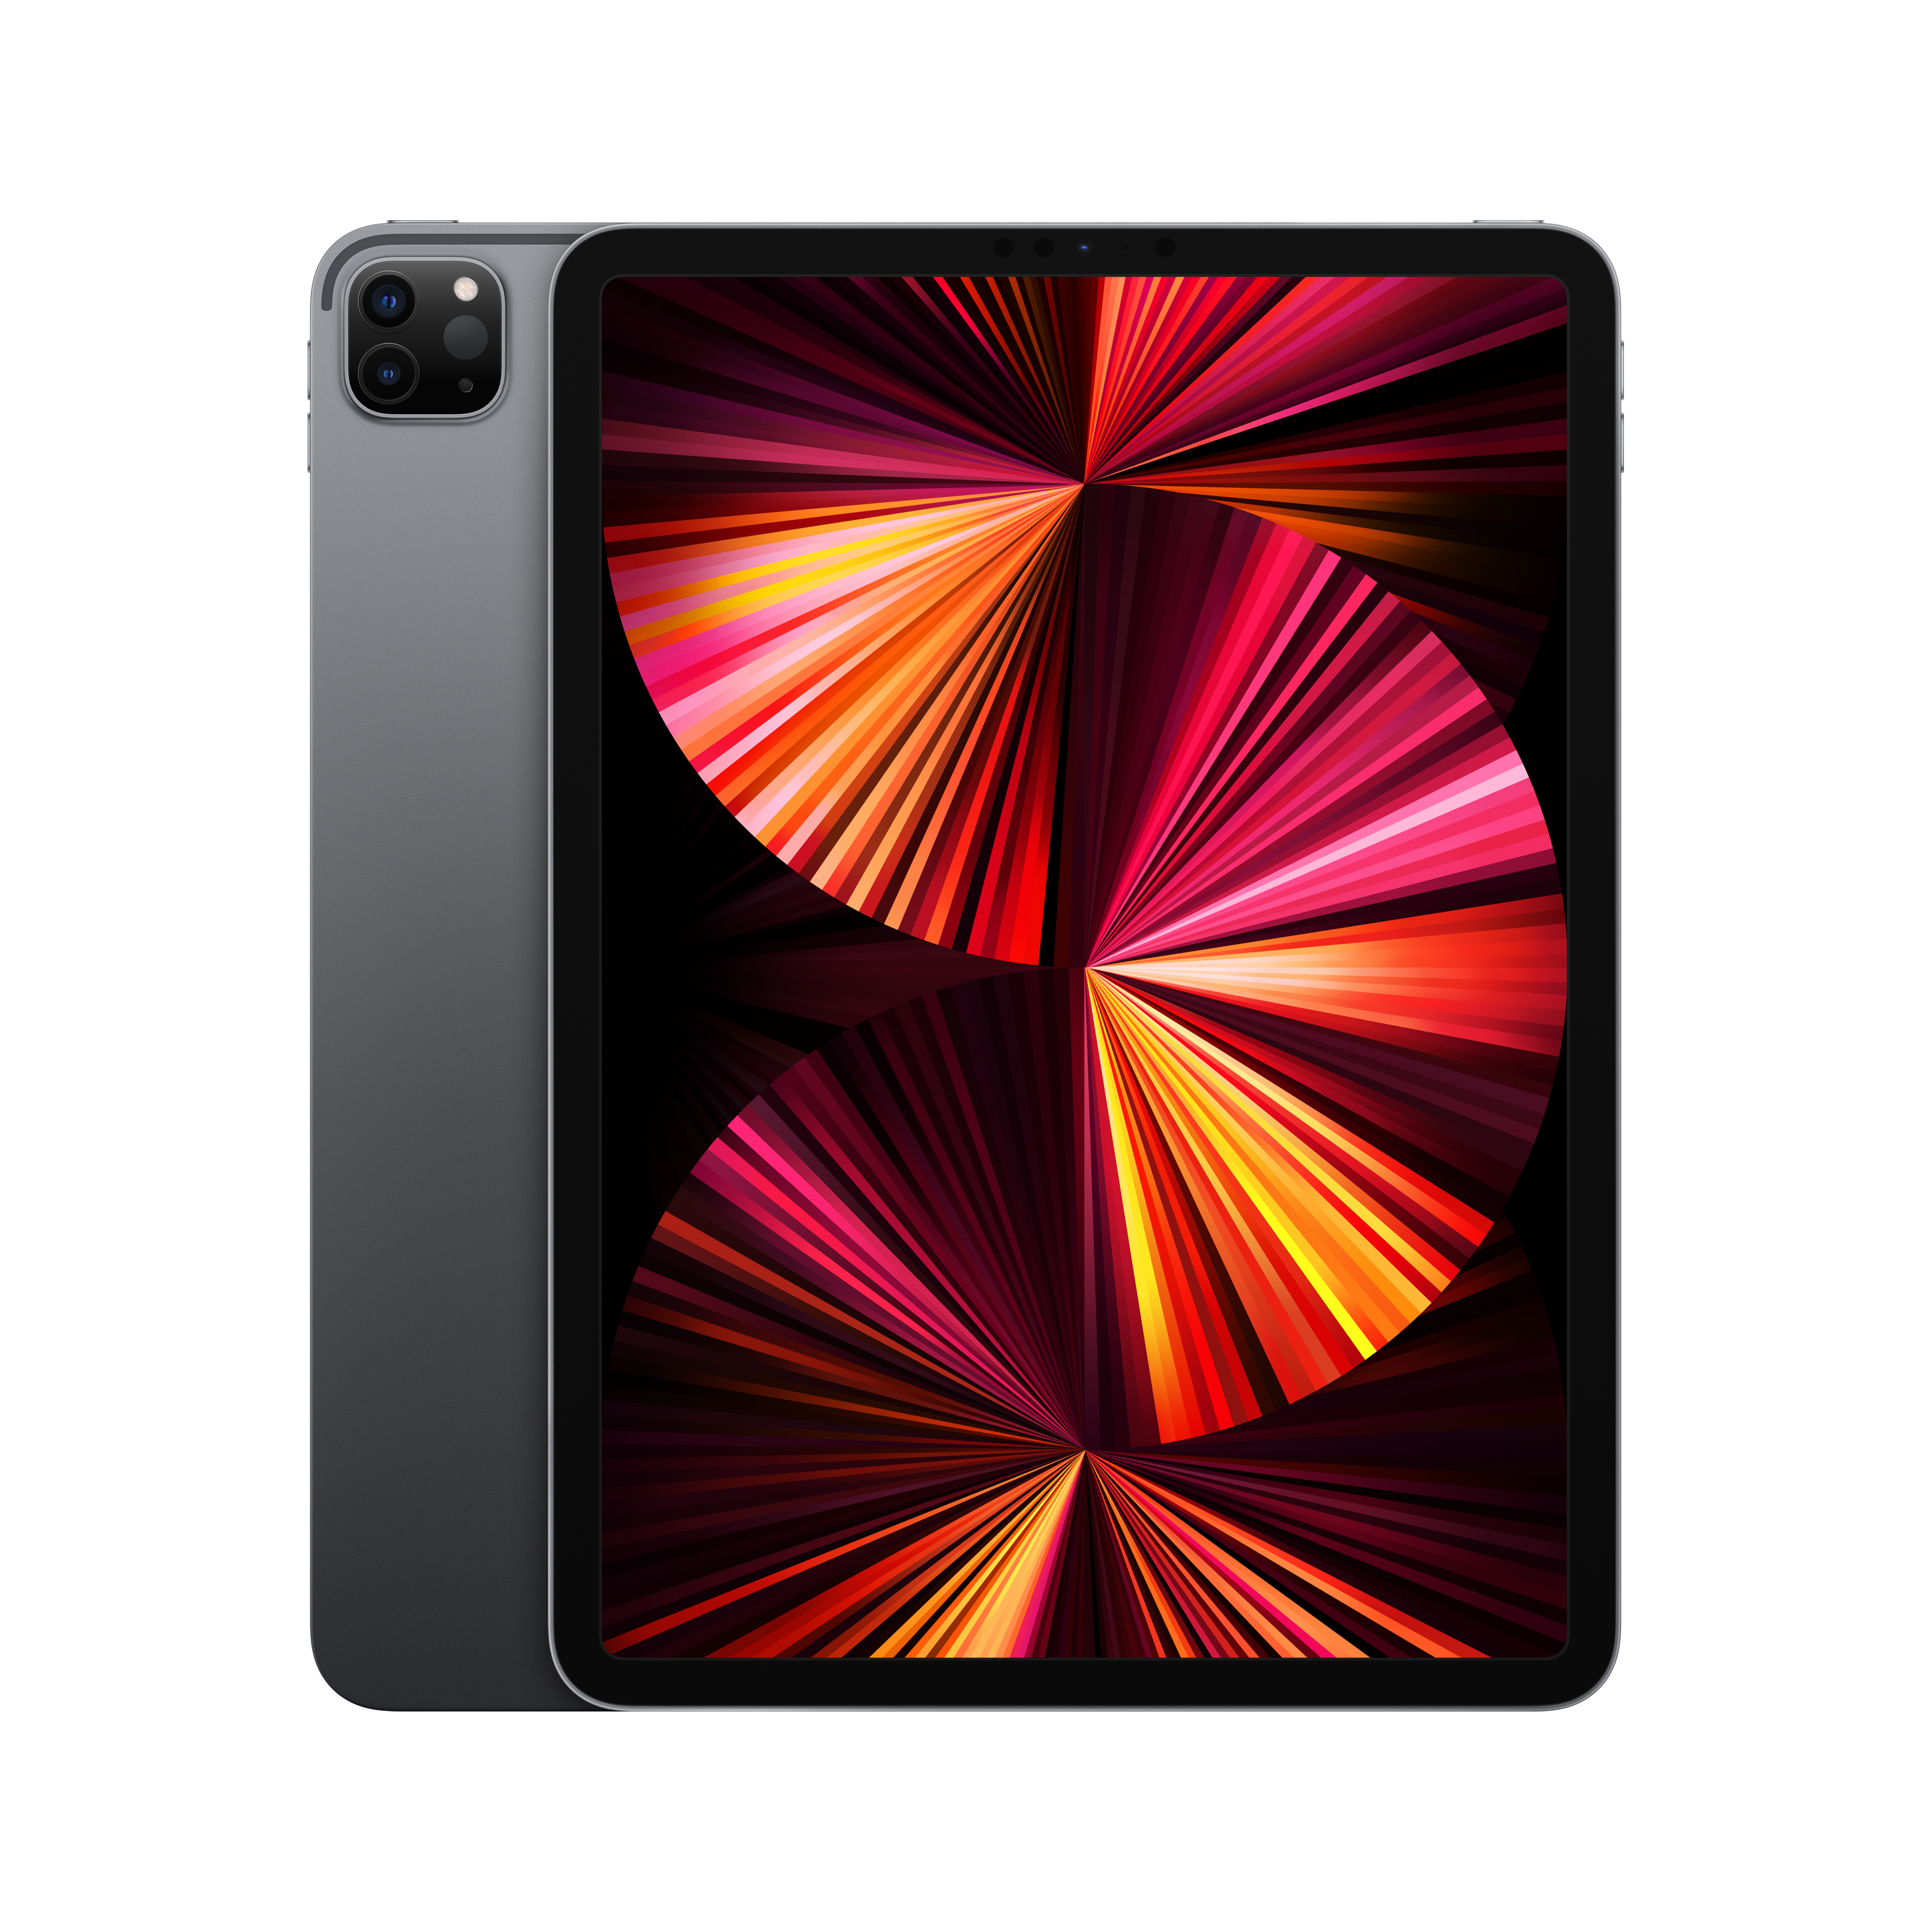 Apple 11-inch iPad Pro (2021) Wi-Fi 256GB - Space Gray - image 1 of 9